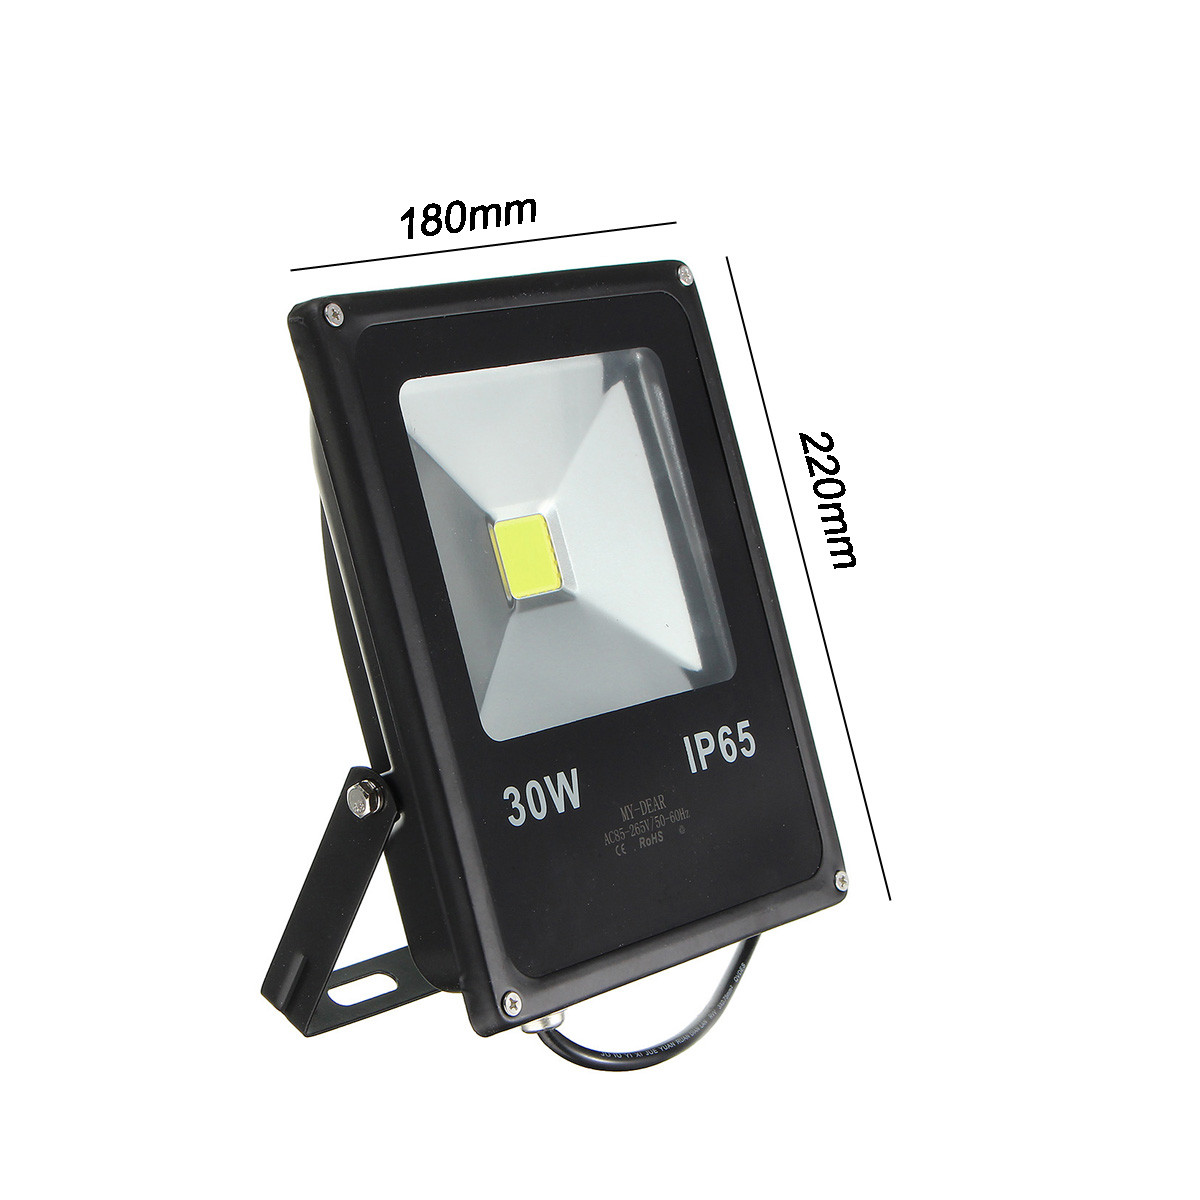 30W-Waterproof-IP65-WhiteWarm-White-LED-Flood-Light-Outdoor-Garden-Security-Lamp-1110879-4